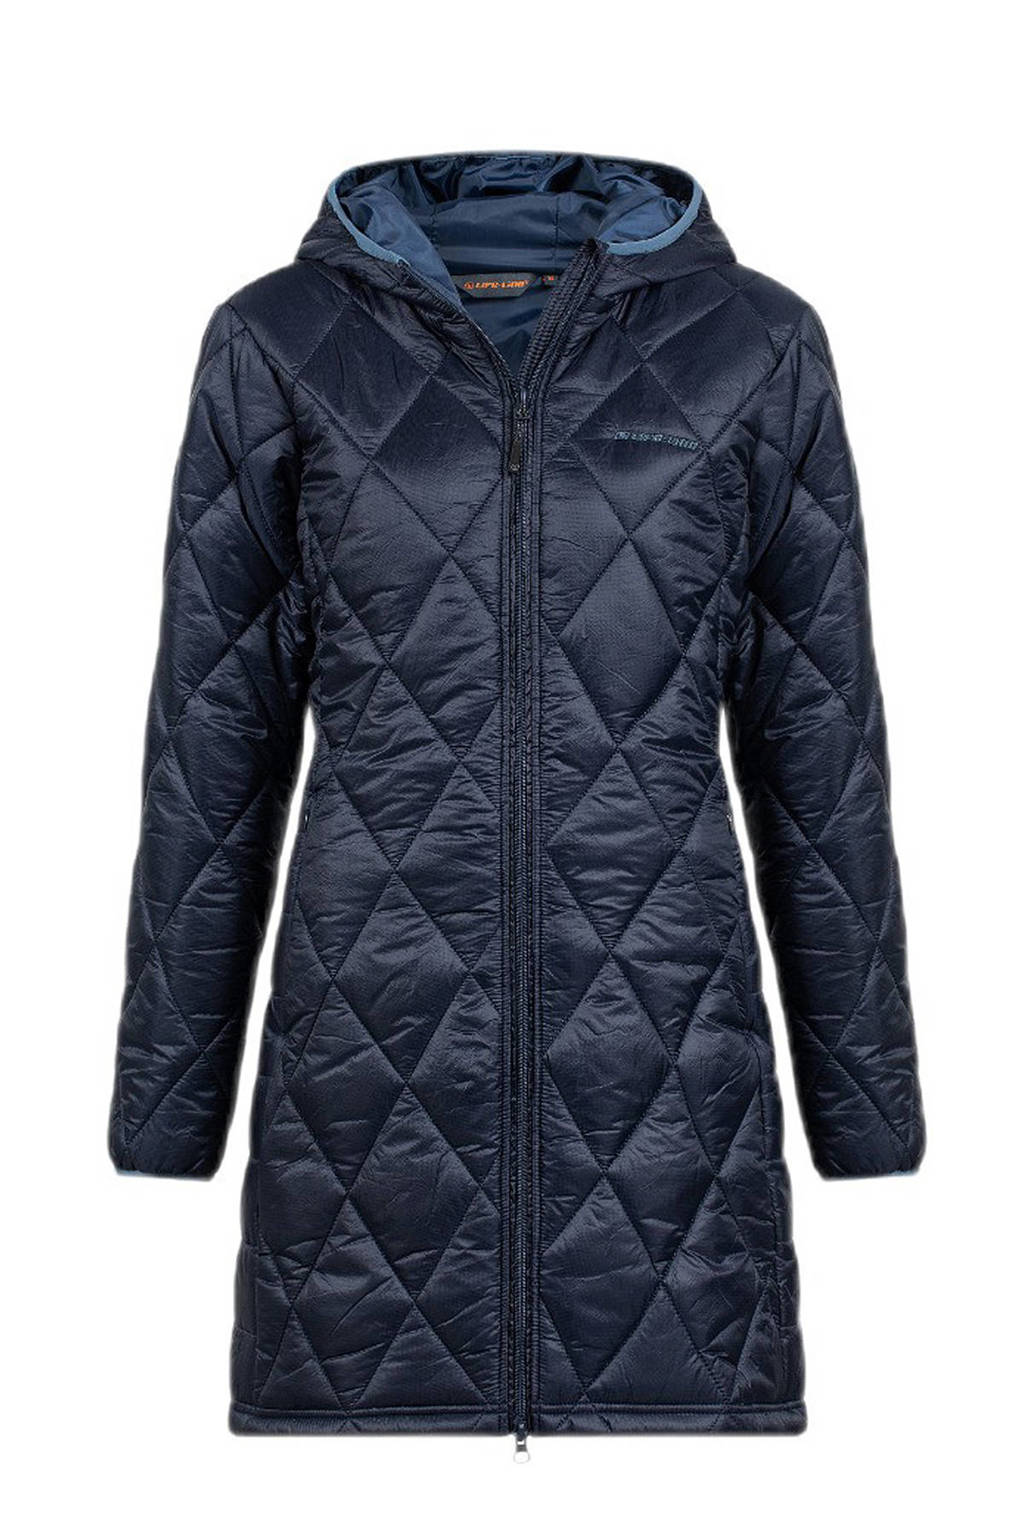 Life-Line outdoor jas Kim donkerblauw, Donkerblauw